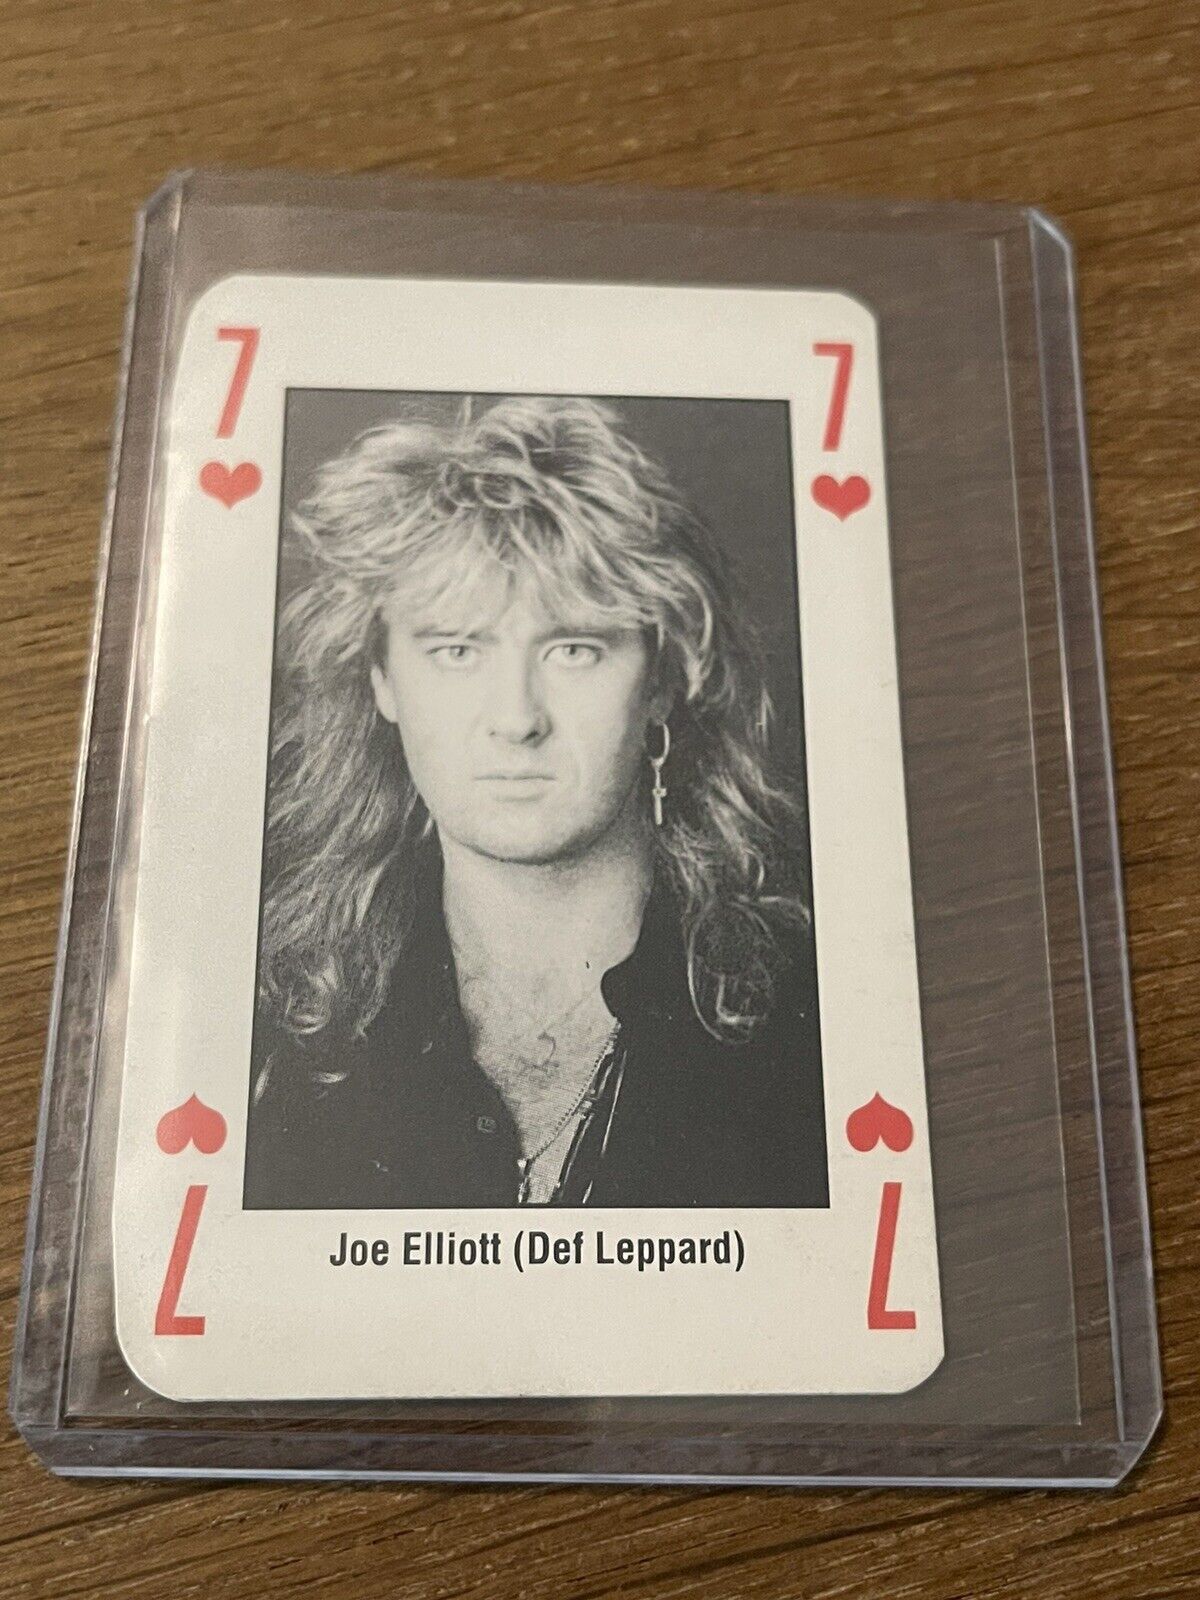 1993 Kerrang Music Card King Metal Playing Cards Def Leppard Joe Elliott Card